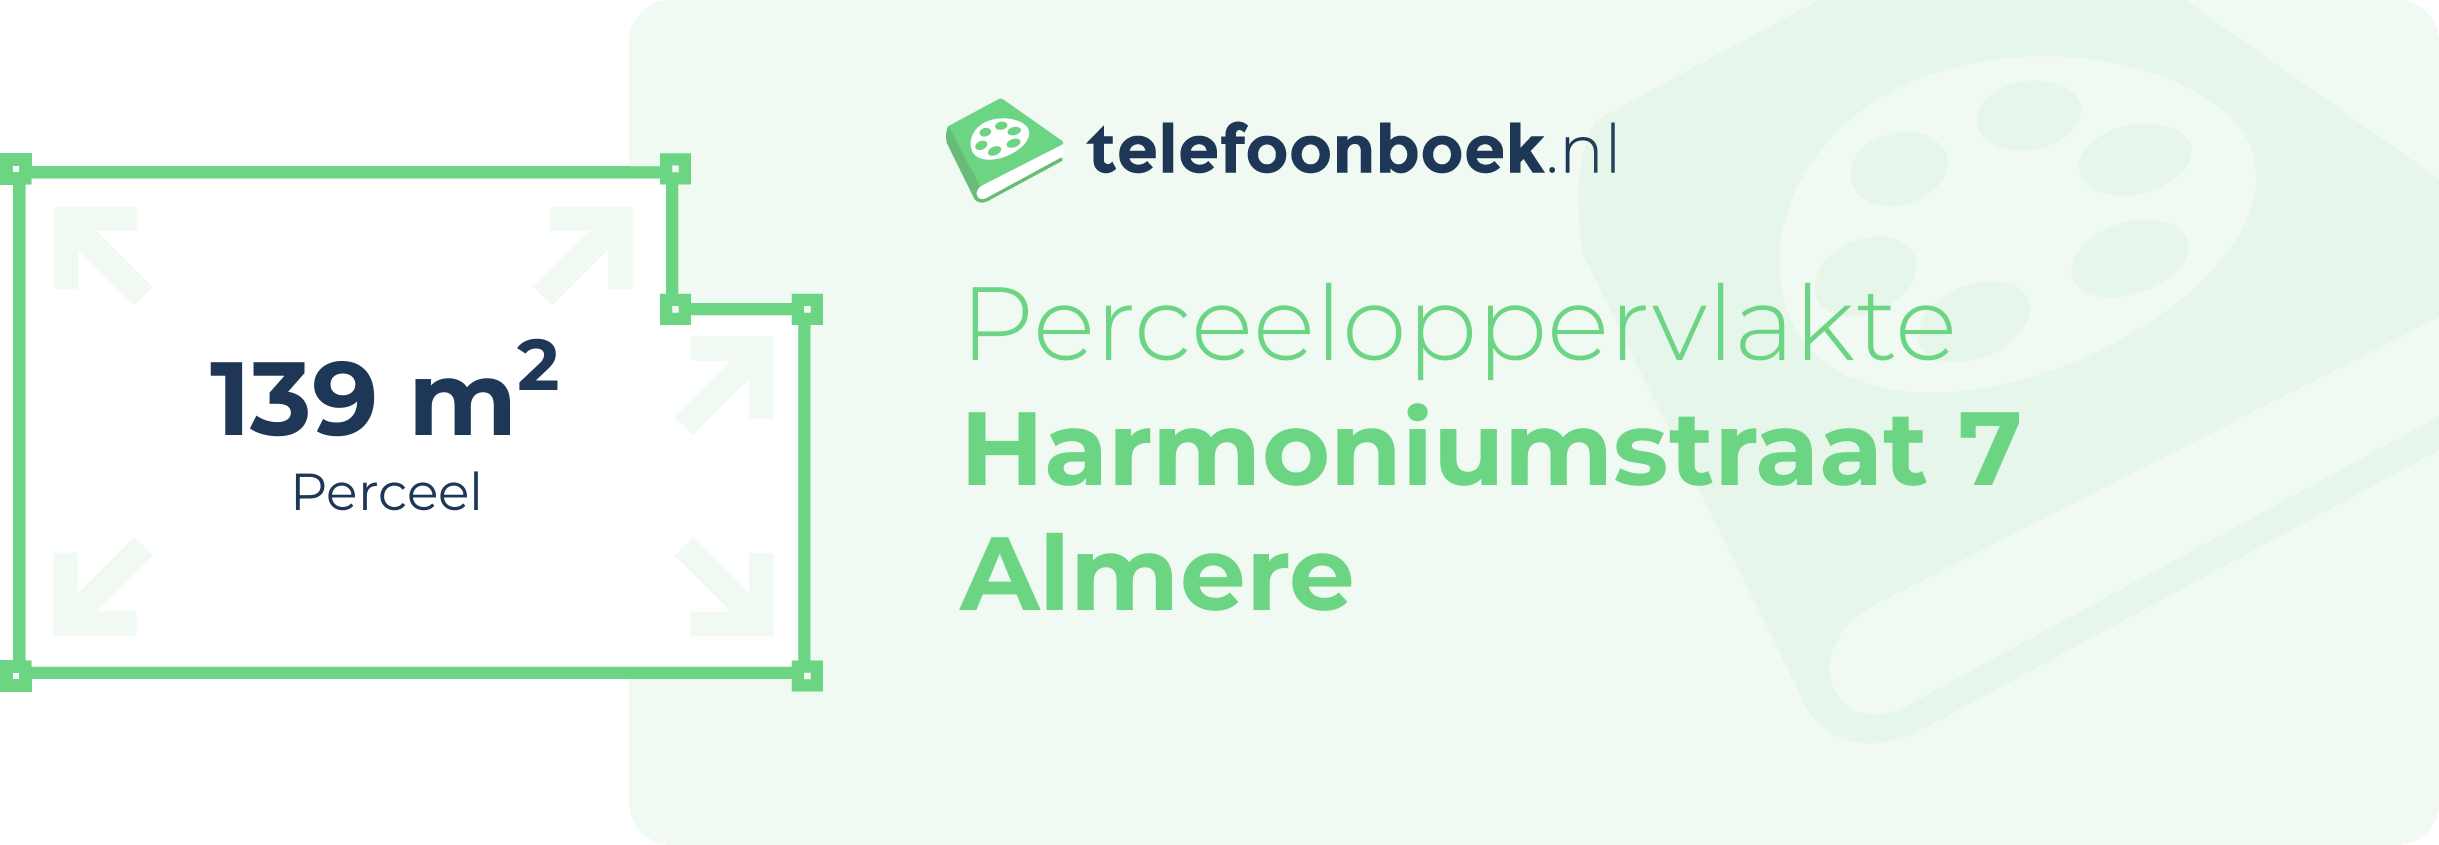 Perceeloppervlakte Harmoniumstraat 7 Almere